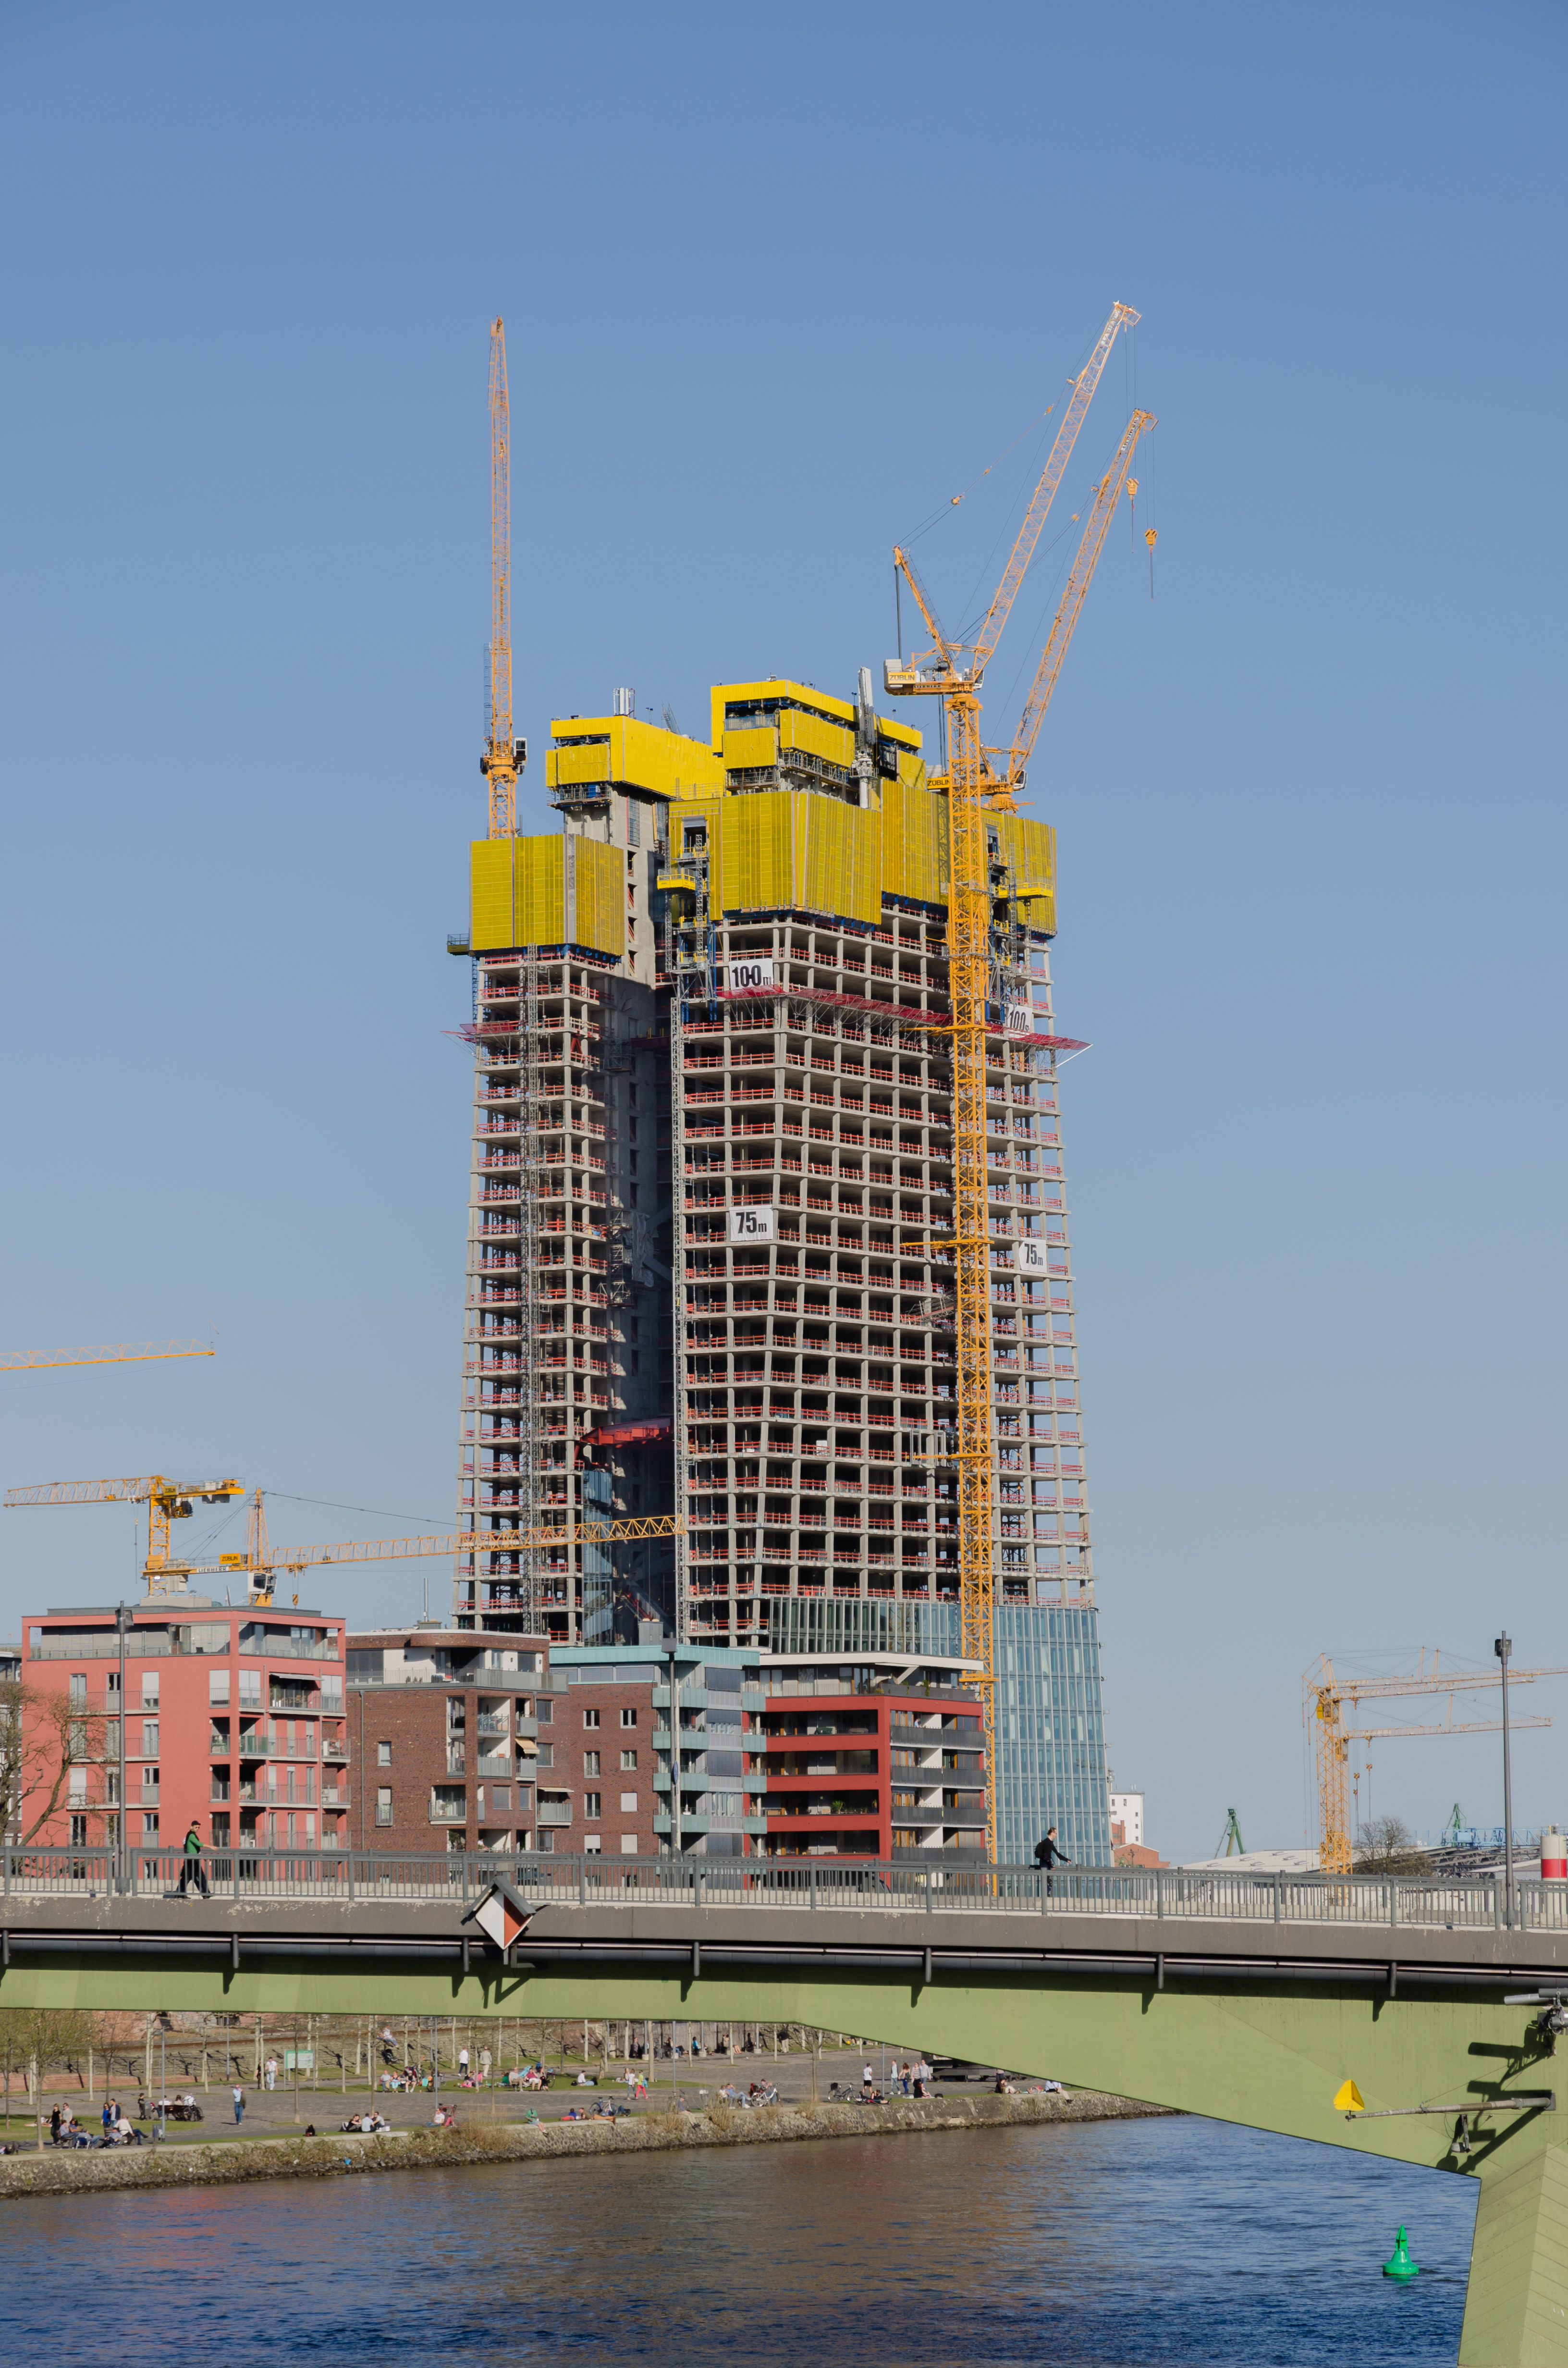 European Central Bank - new building under construction - Frankfurt - Germany - 02